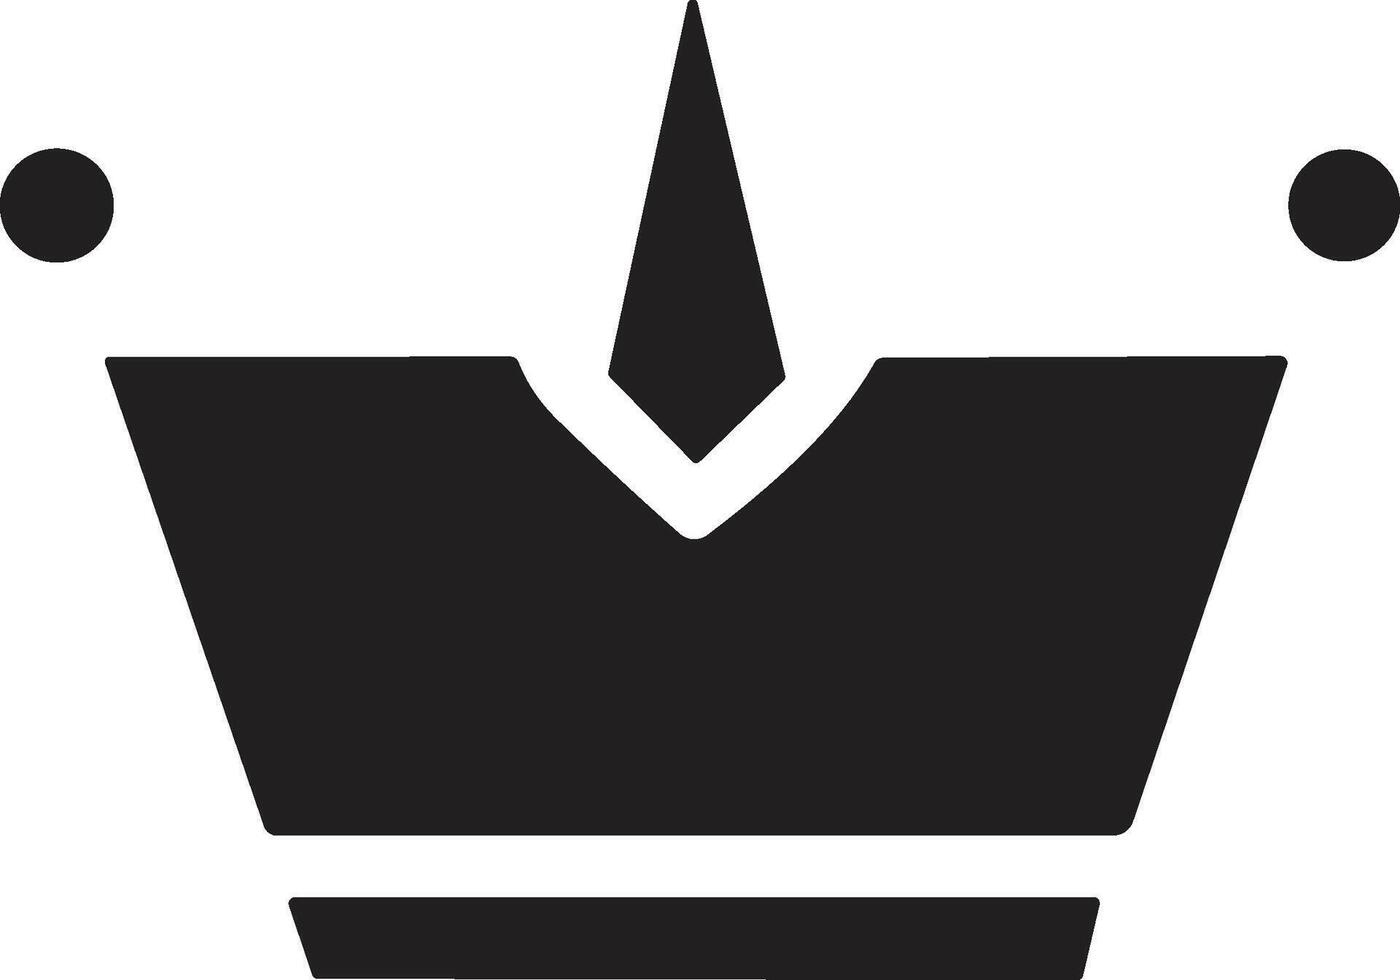 Krone Logo im modern minimal Stil vektor